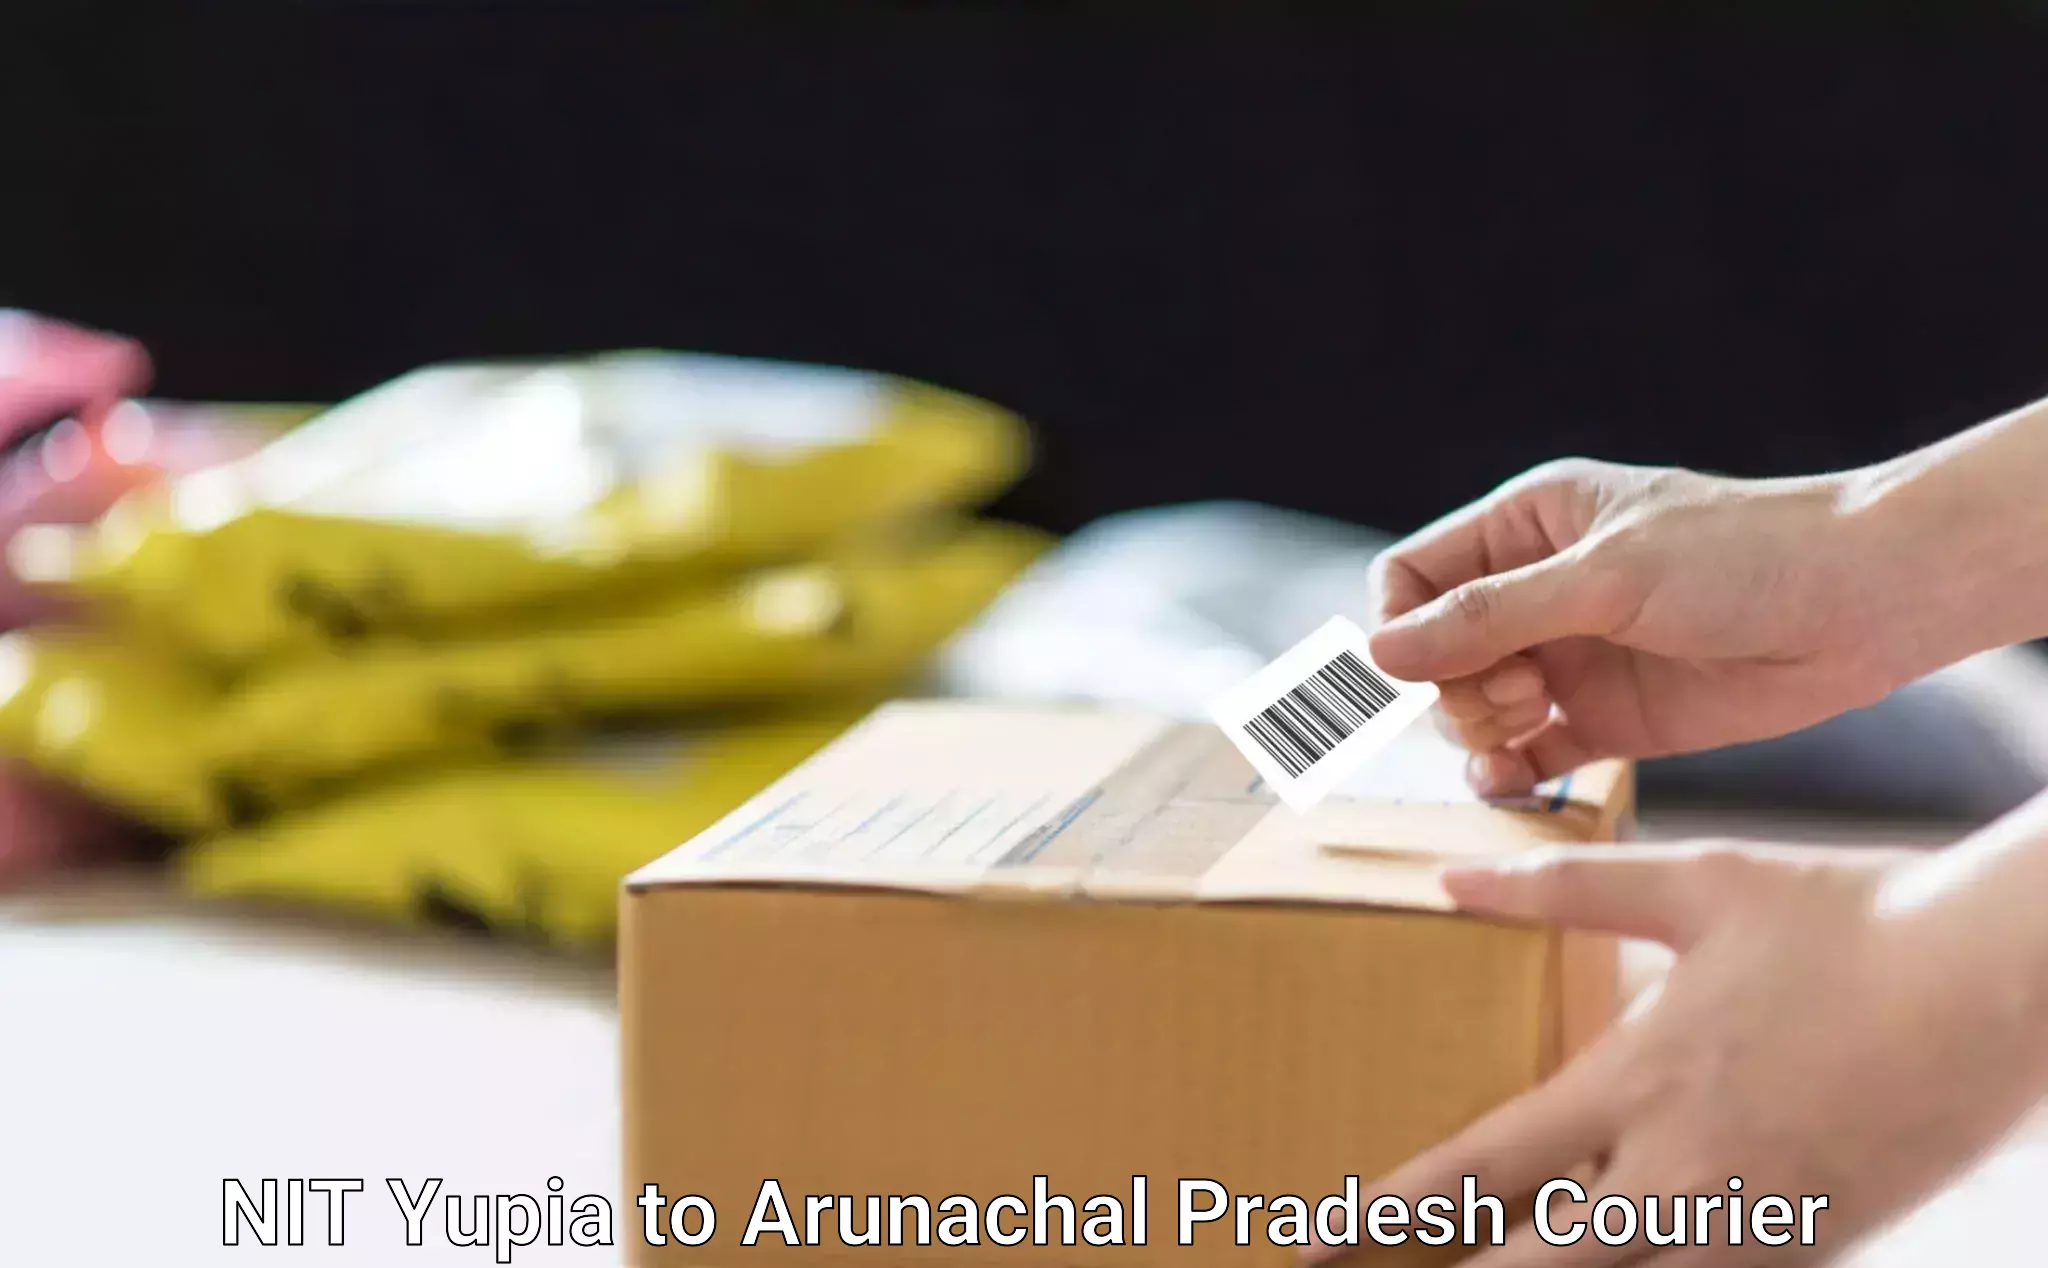 Express mail solutions NIT Yupia to Arunachal Pradesh